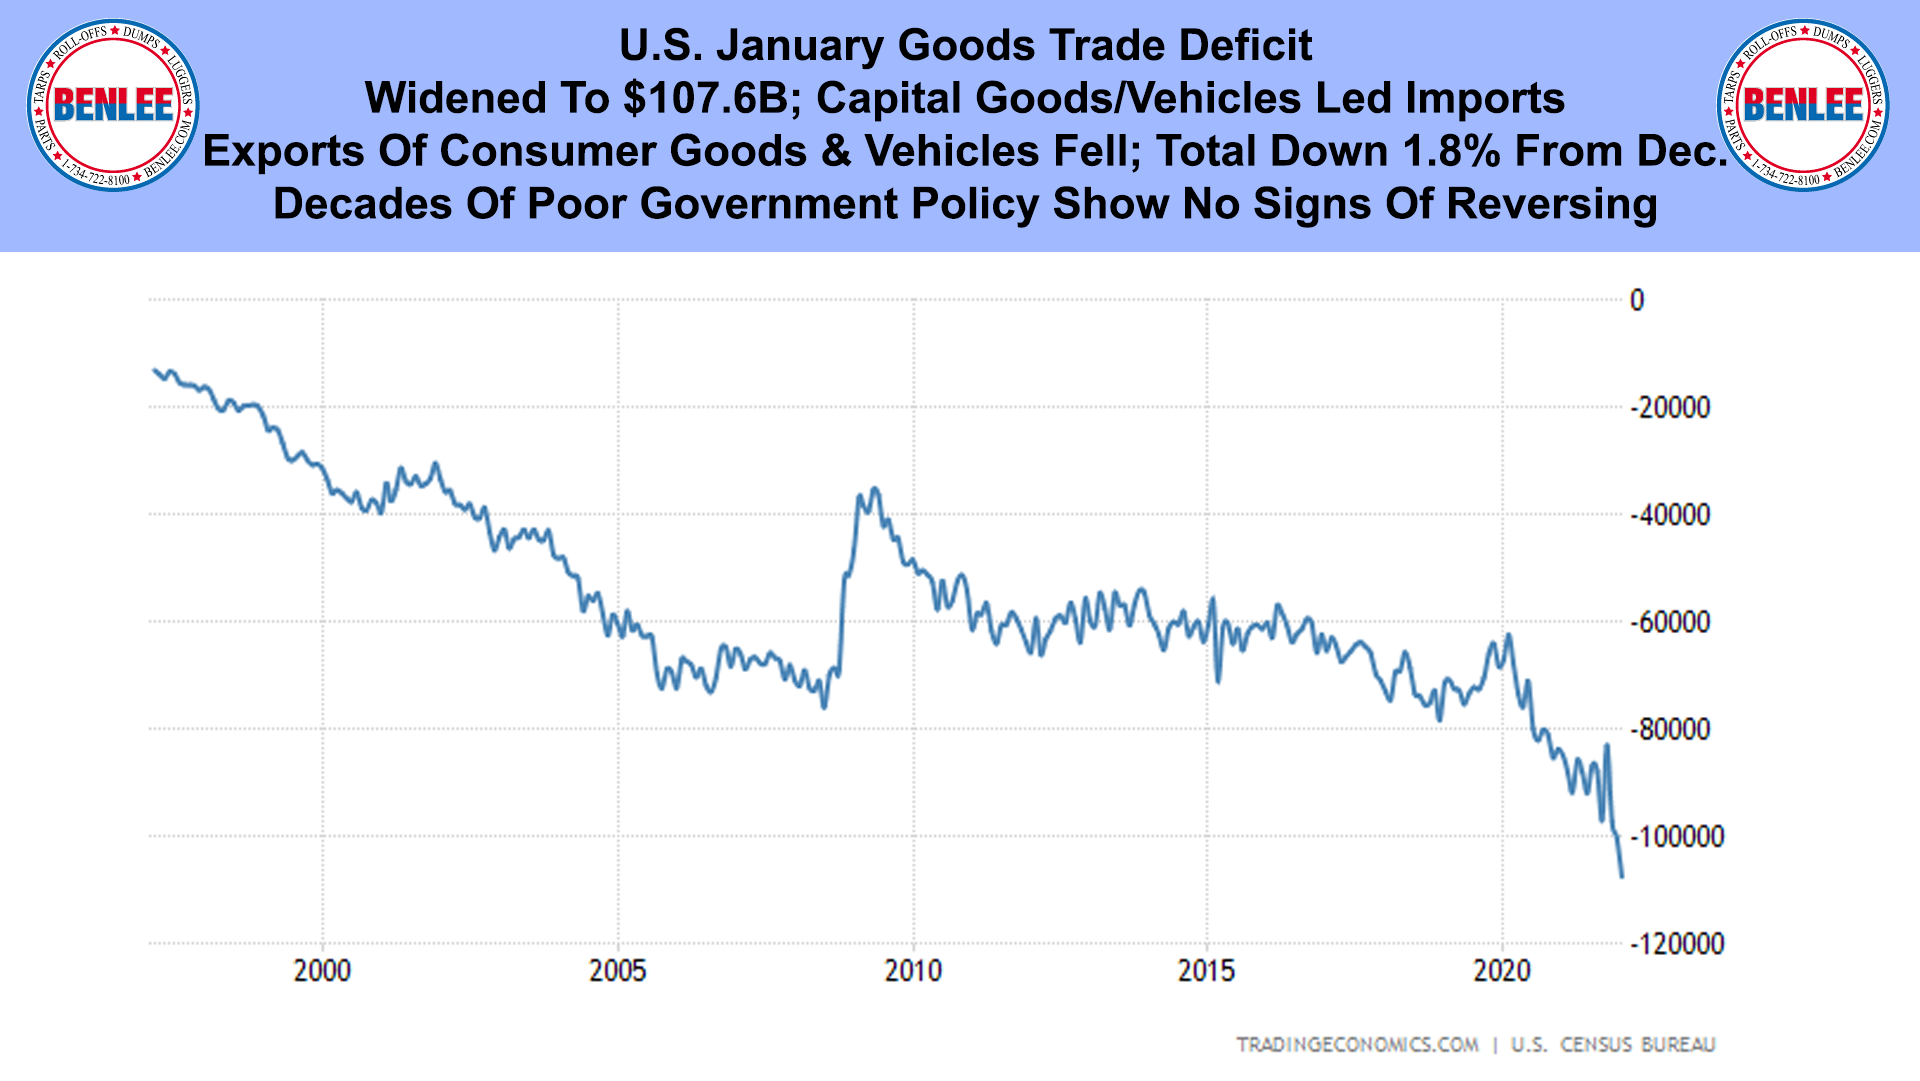 U.S. January Goods Trade Deficit